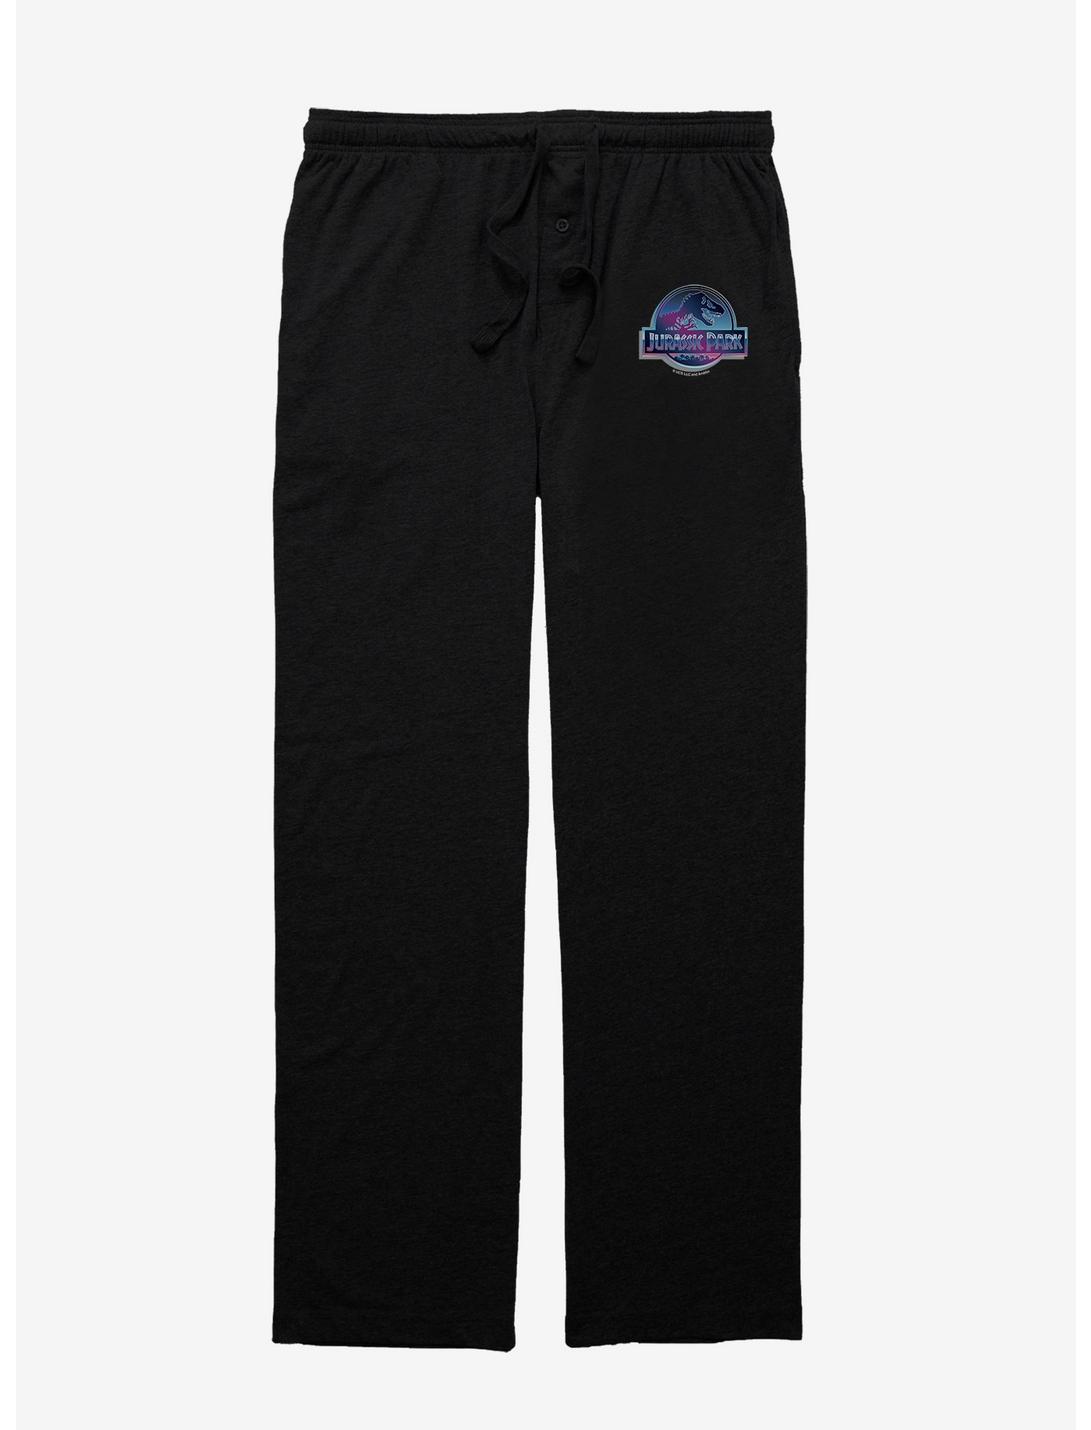 Jurassic Park Multicolor Logo Pajama Pants, BLACK, hi-res